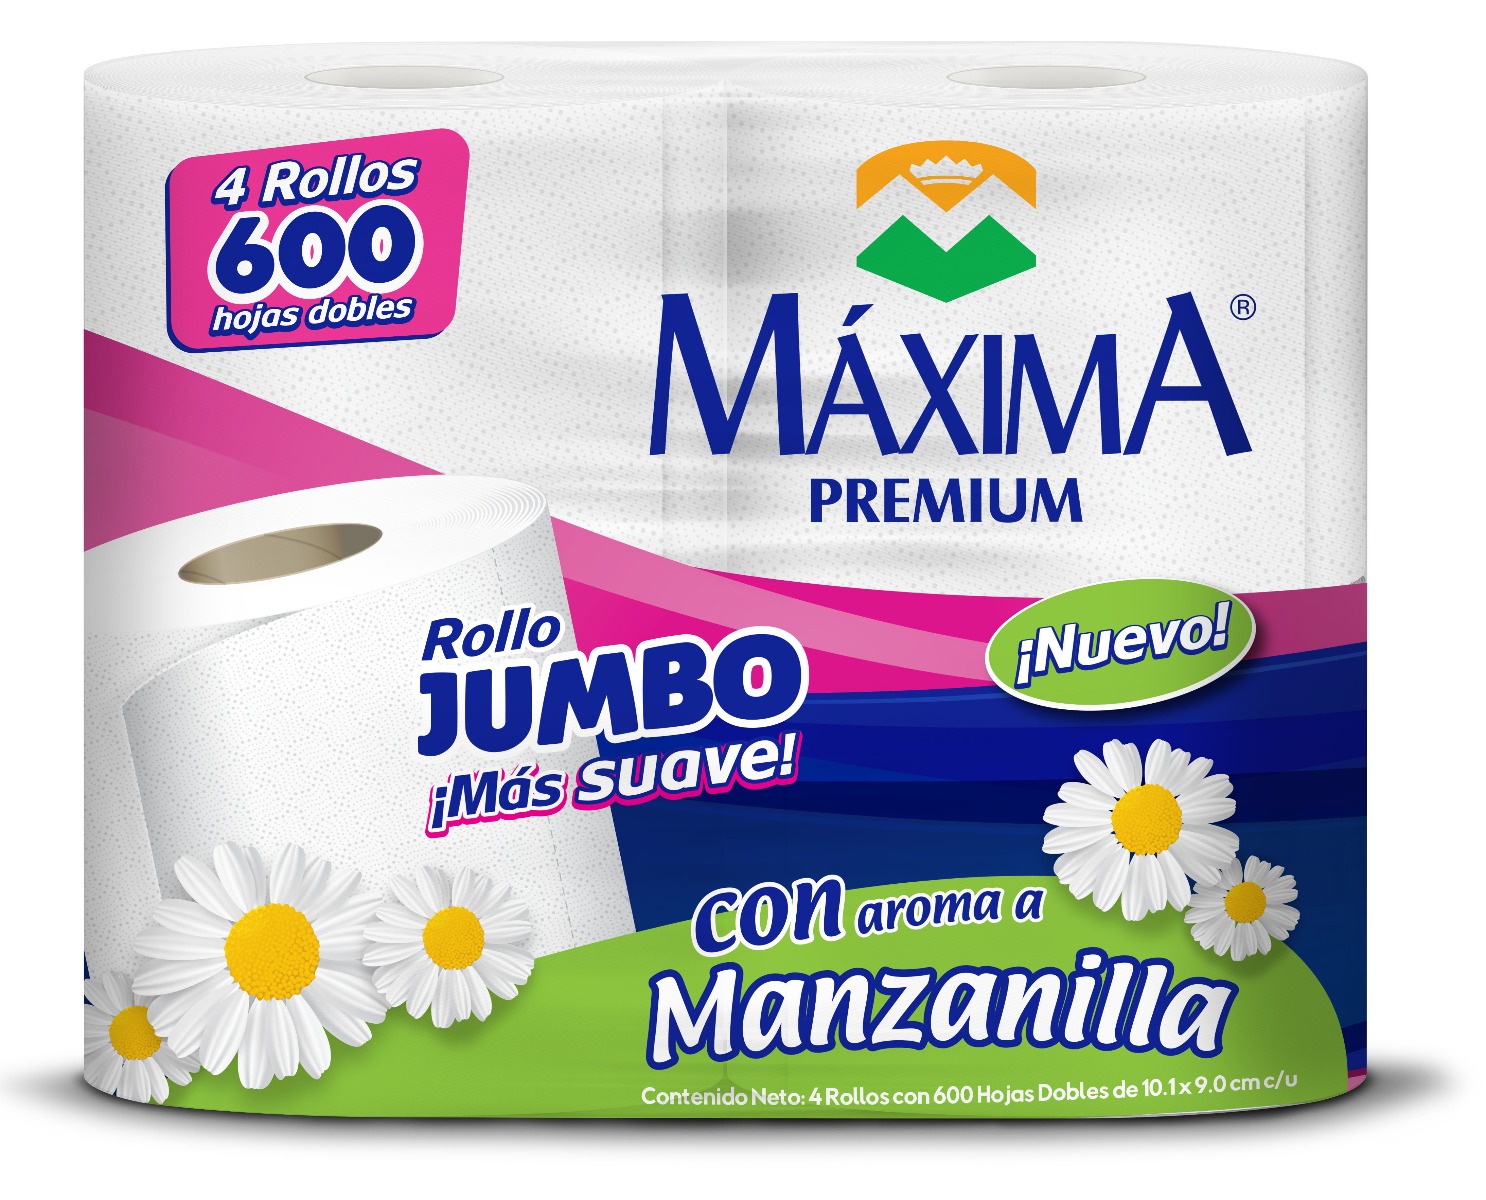 Maxima Premium Hig Manzanilla 600 Hojas 12/4 Pz